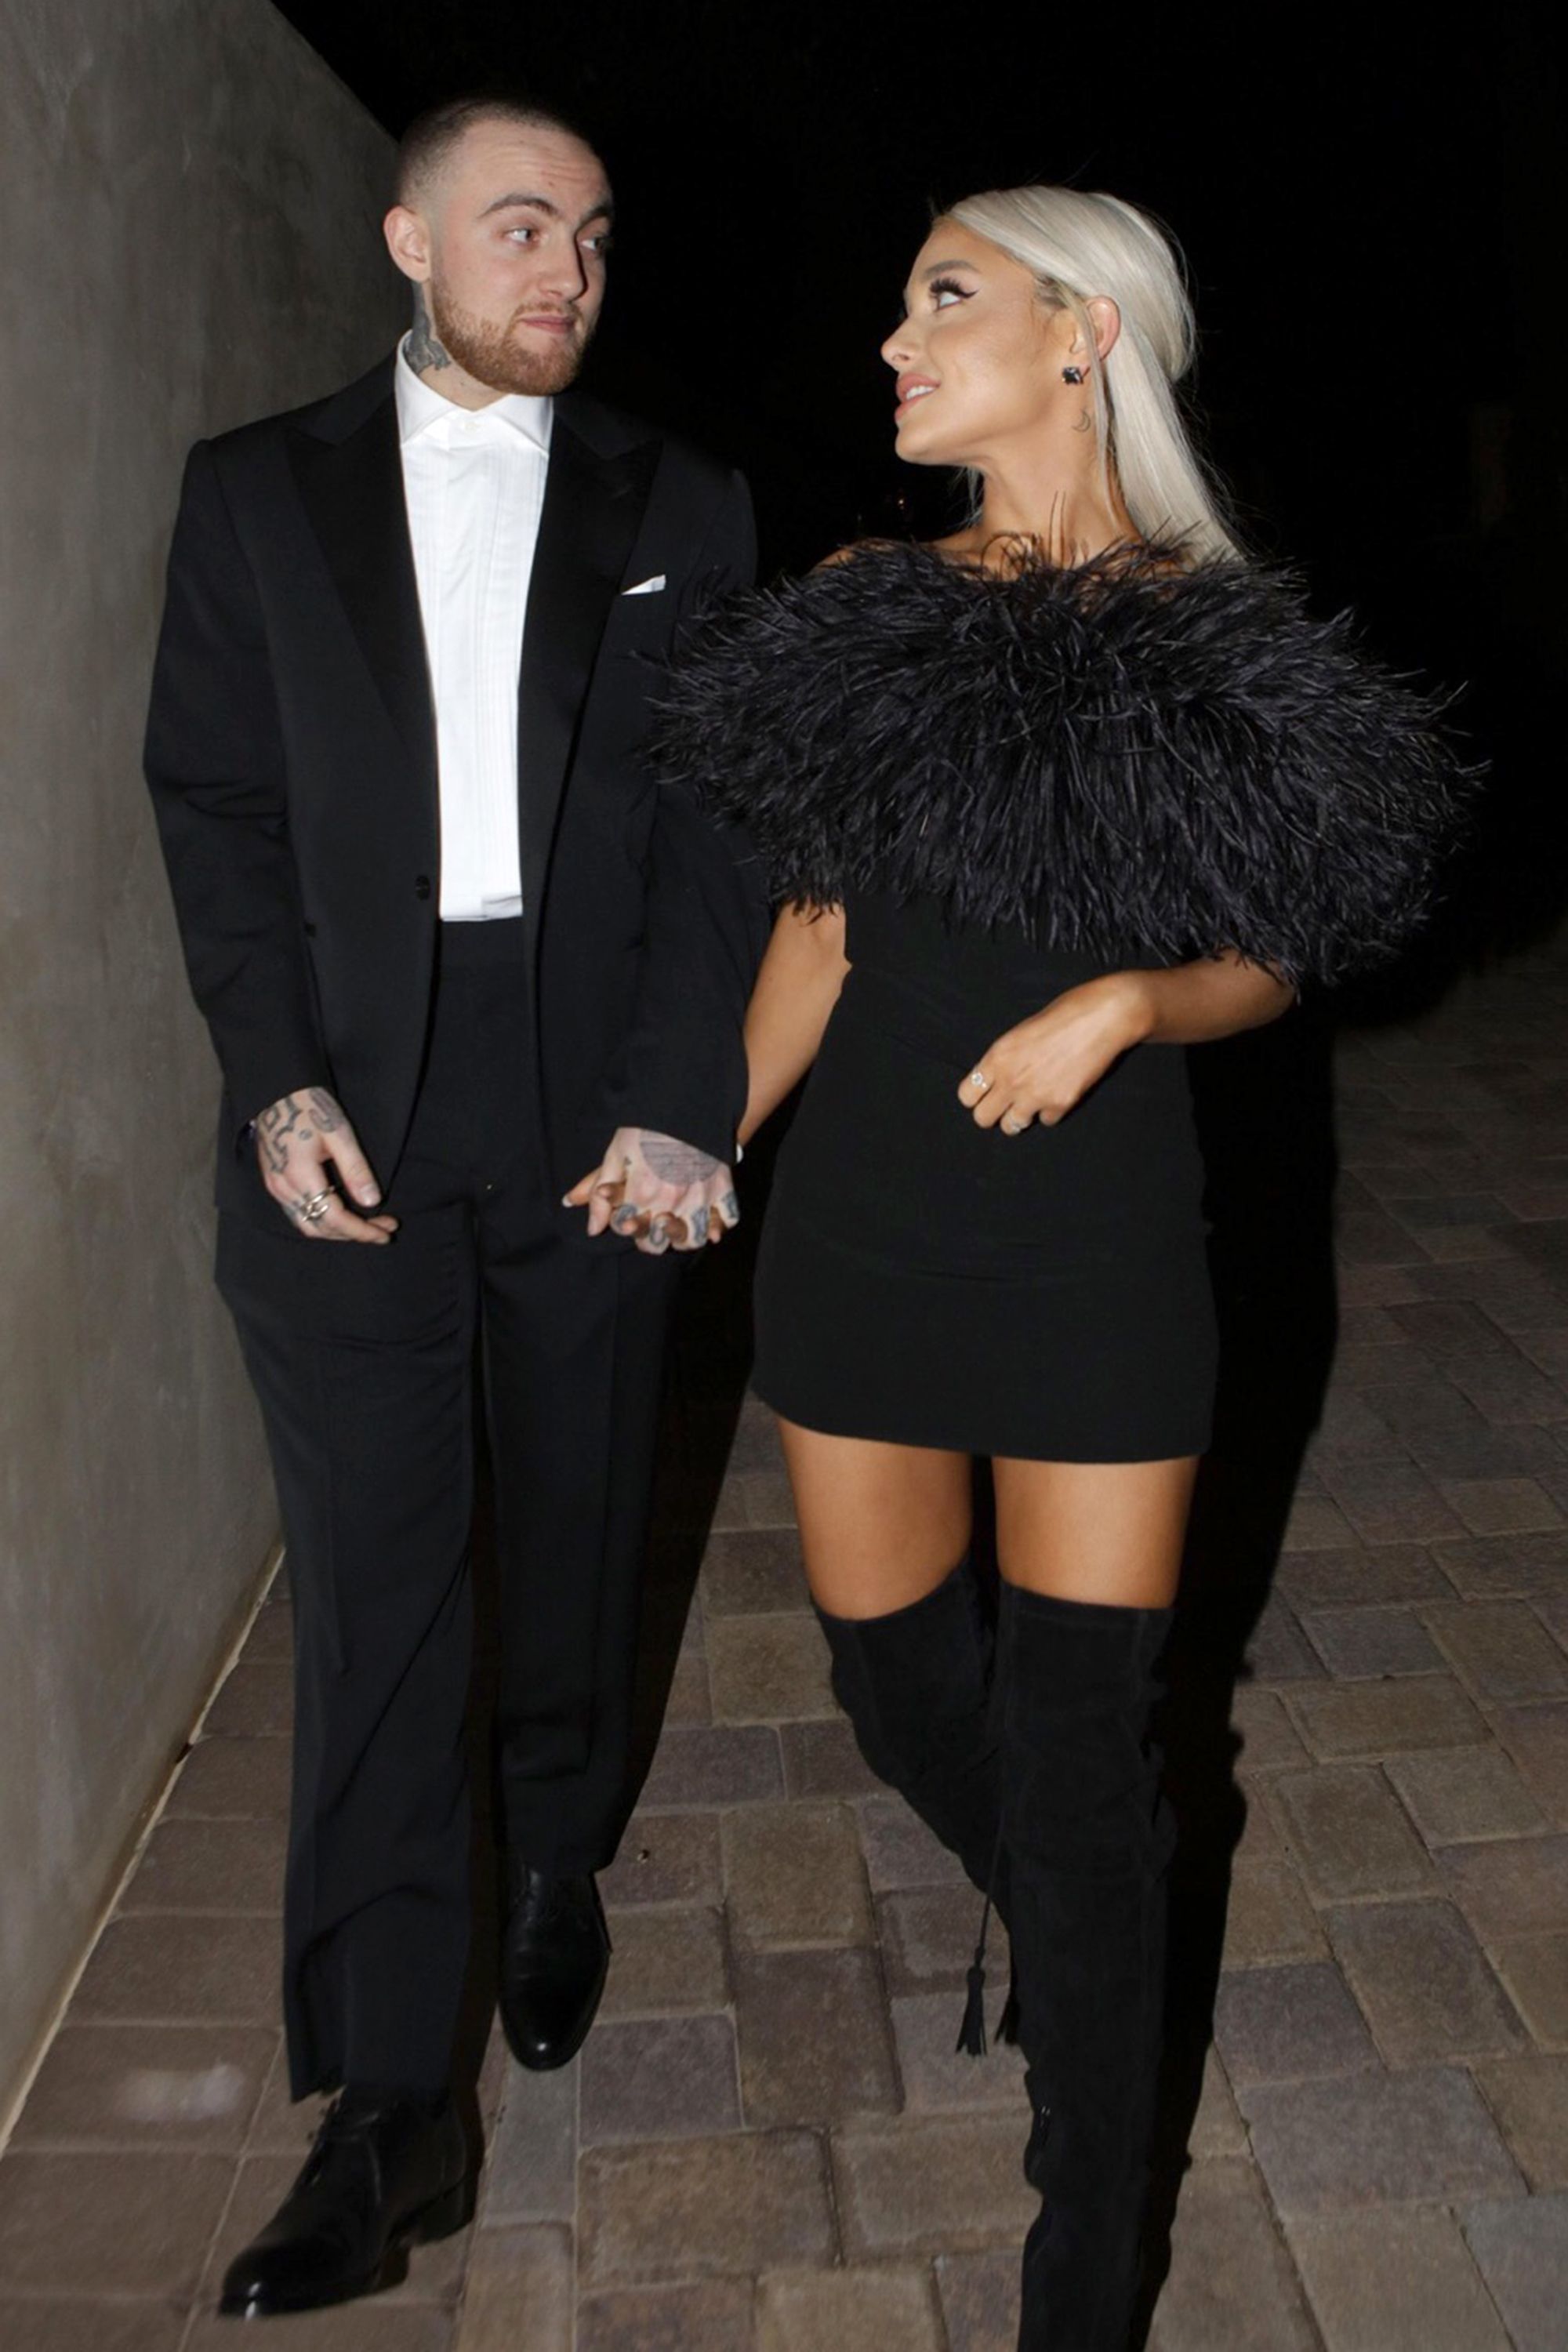 ArianaGrande Updates on X: Ariana Grande & Mac Miller at the